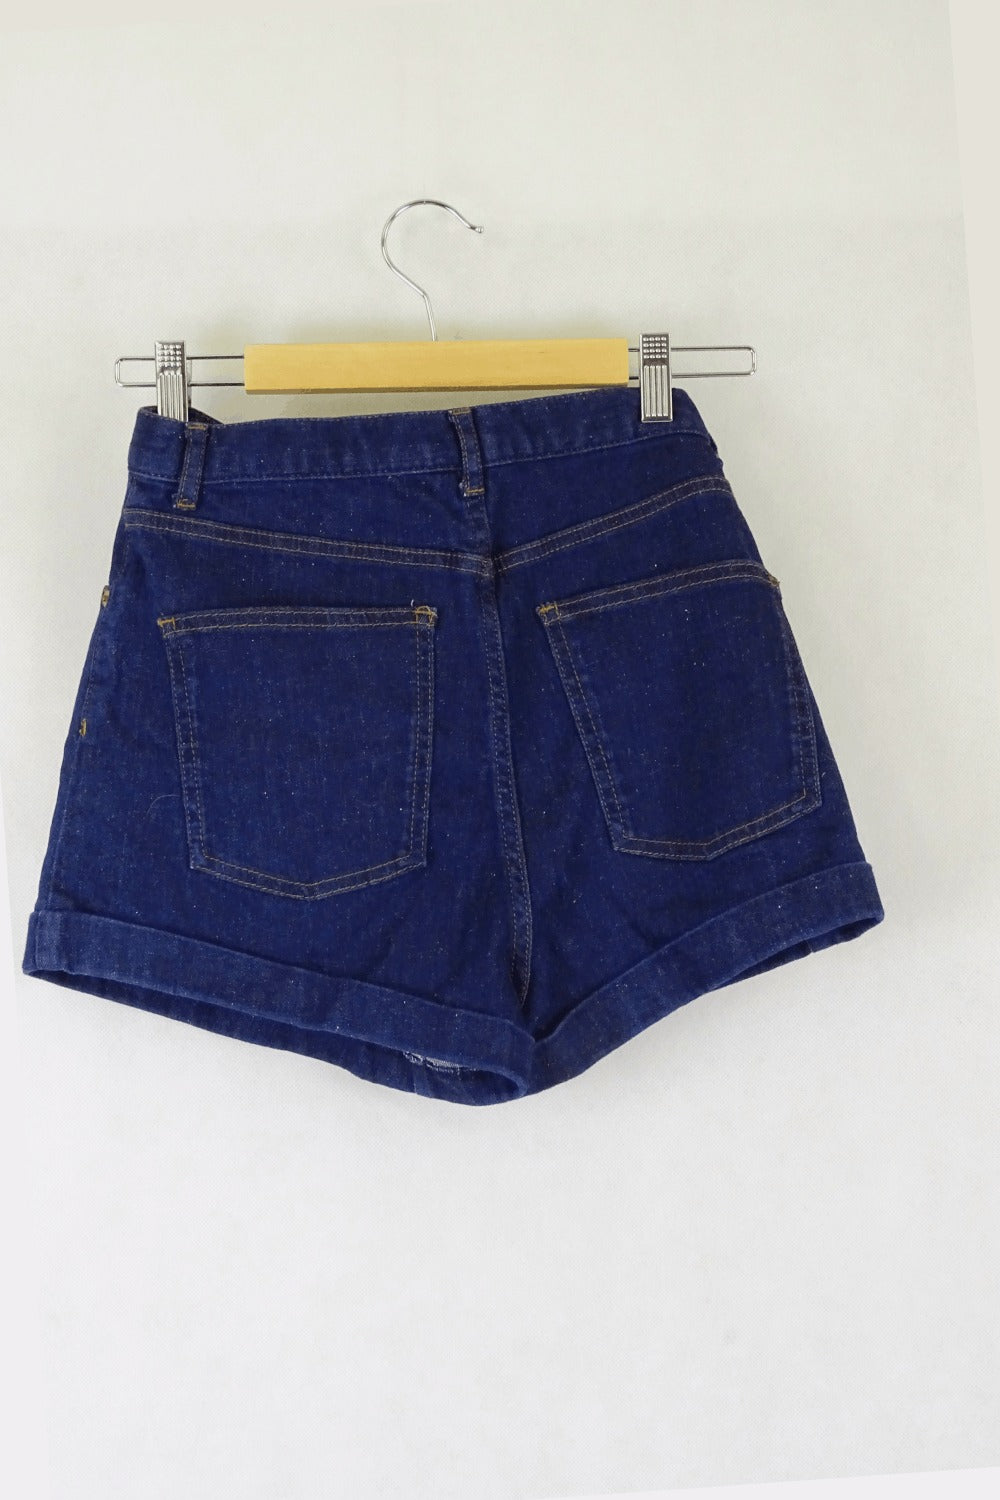 Topshop Blue Denim Shorts 10